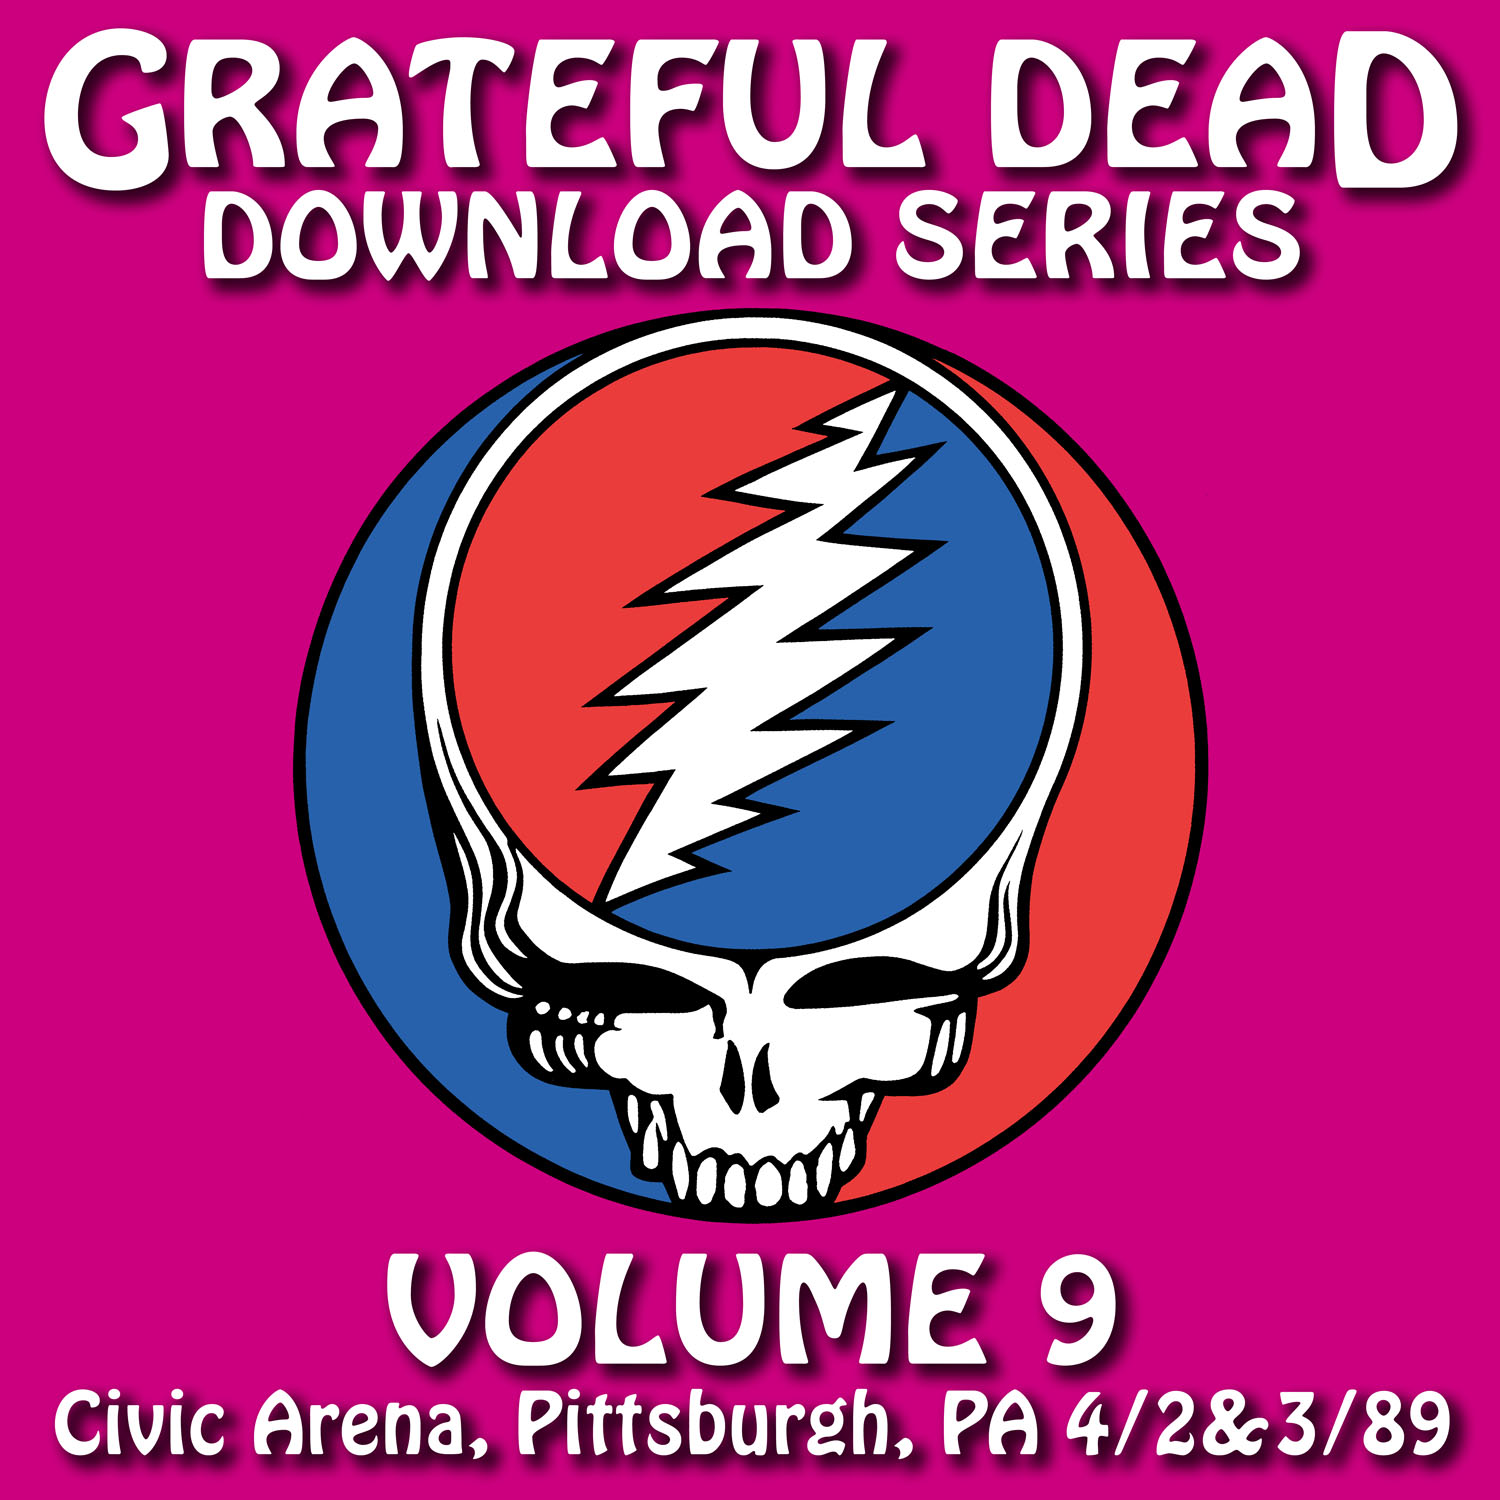 Grateful Dead Download Series 9 album cover artwork